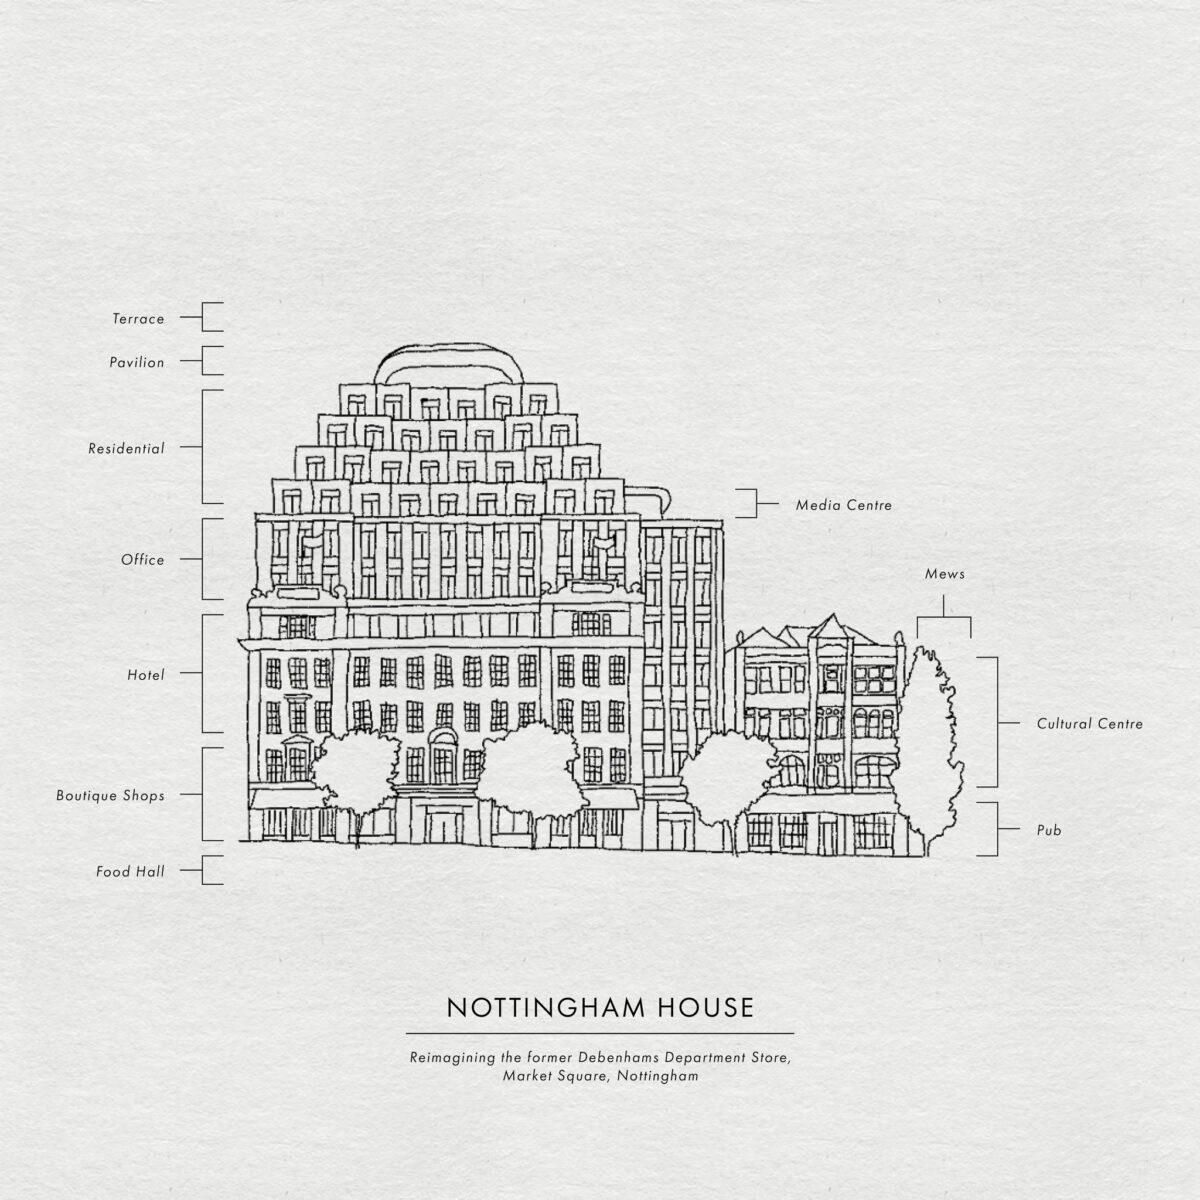 debenhams facility mix sketch illustration by GT3 Architects 